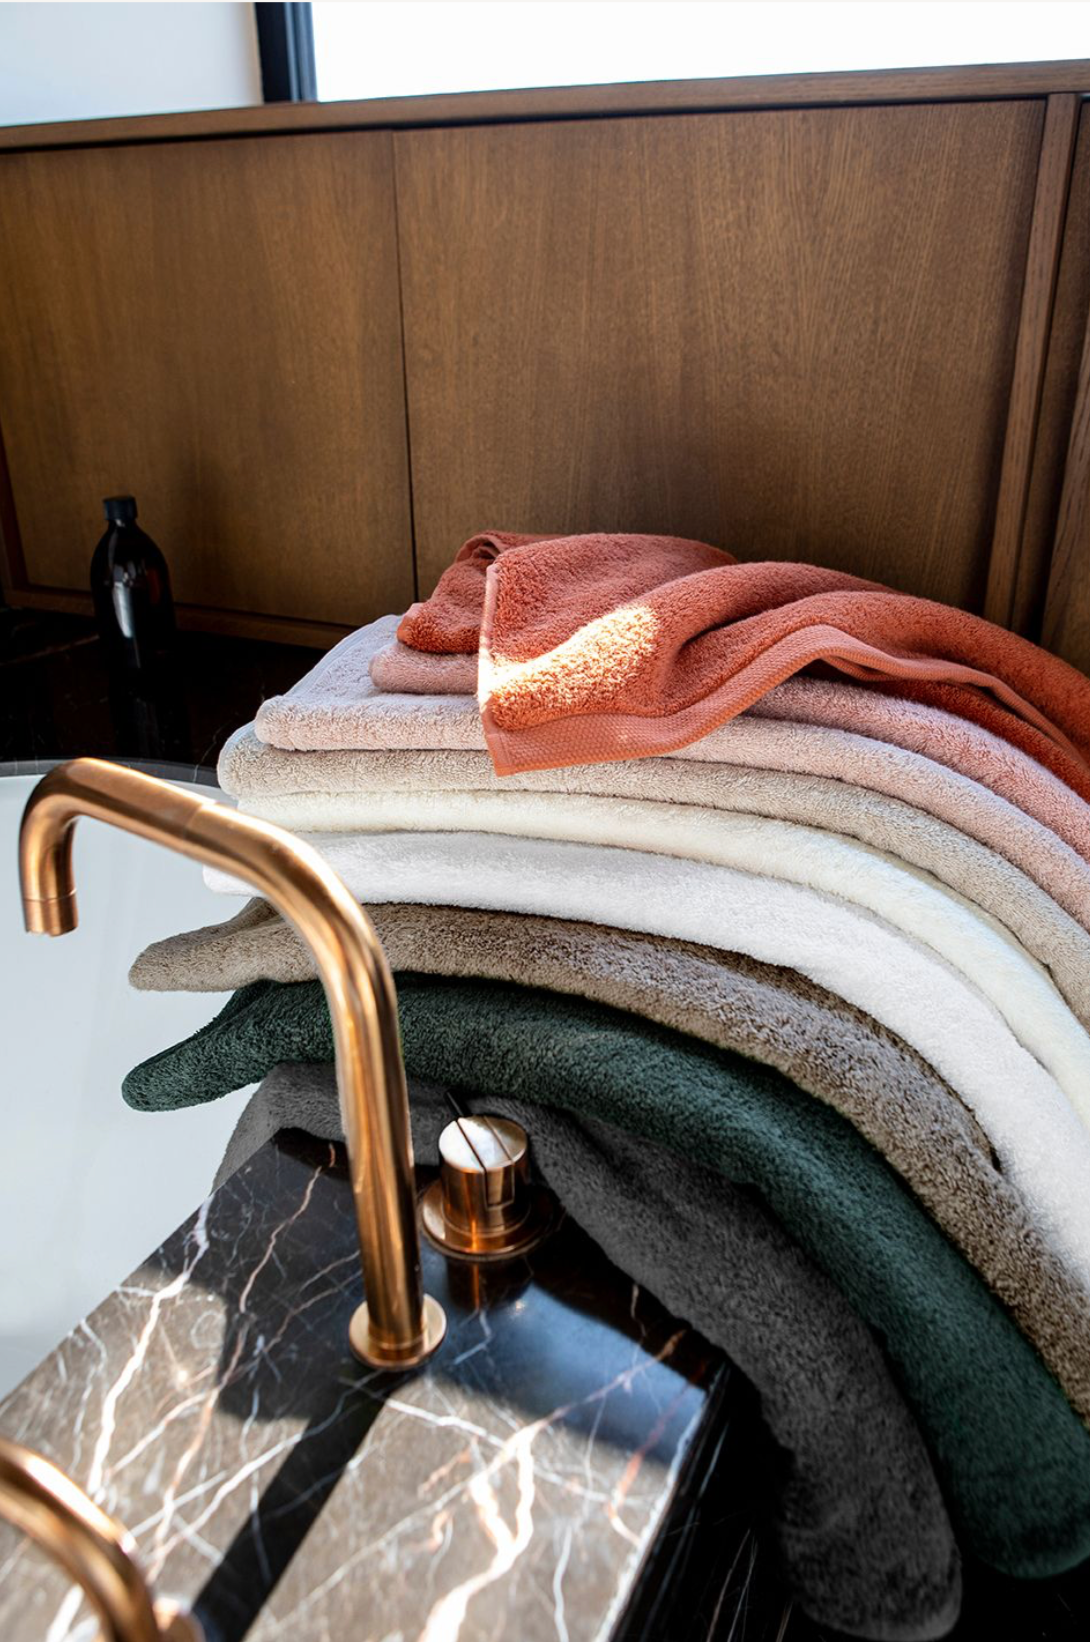 essentiel bath linen collection by alexandre turpault on adorn.house